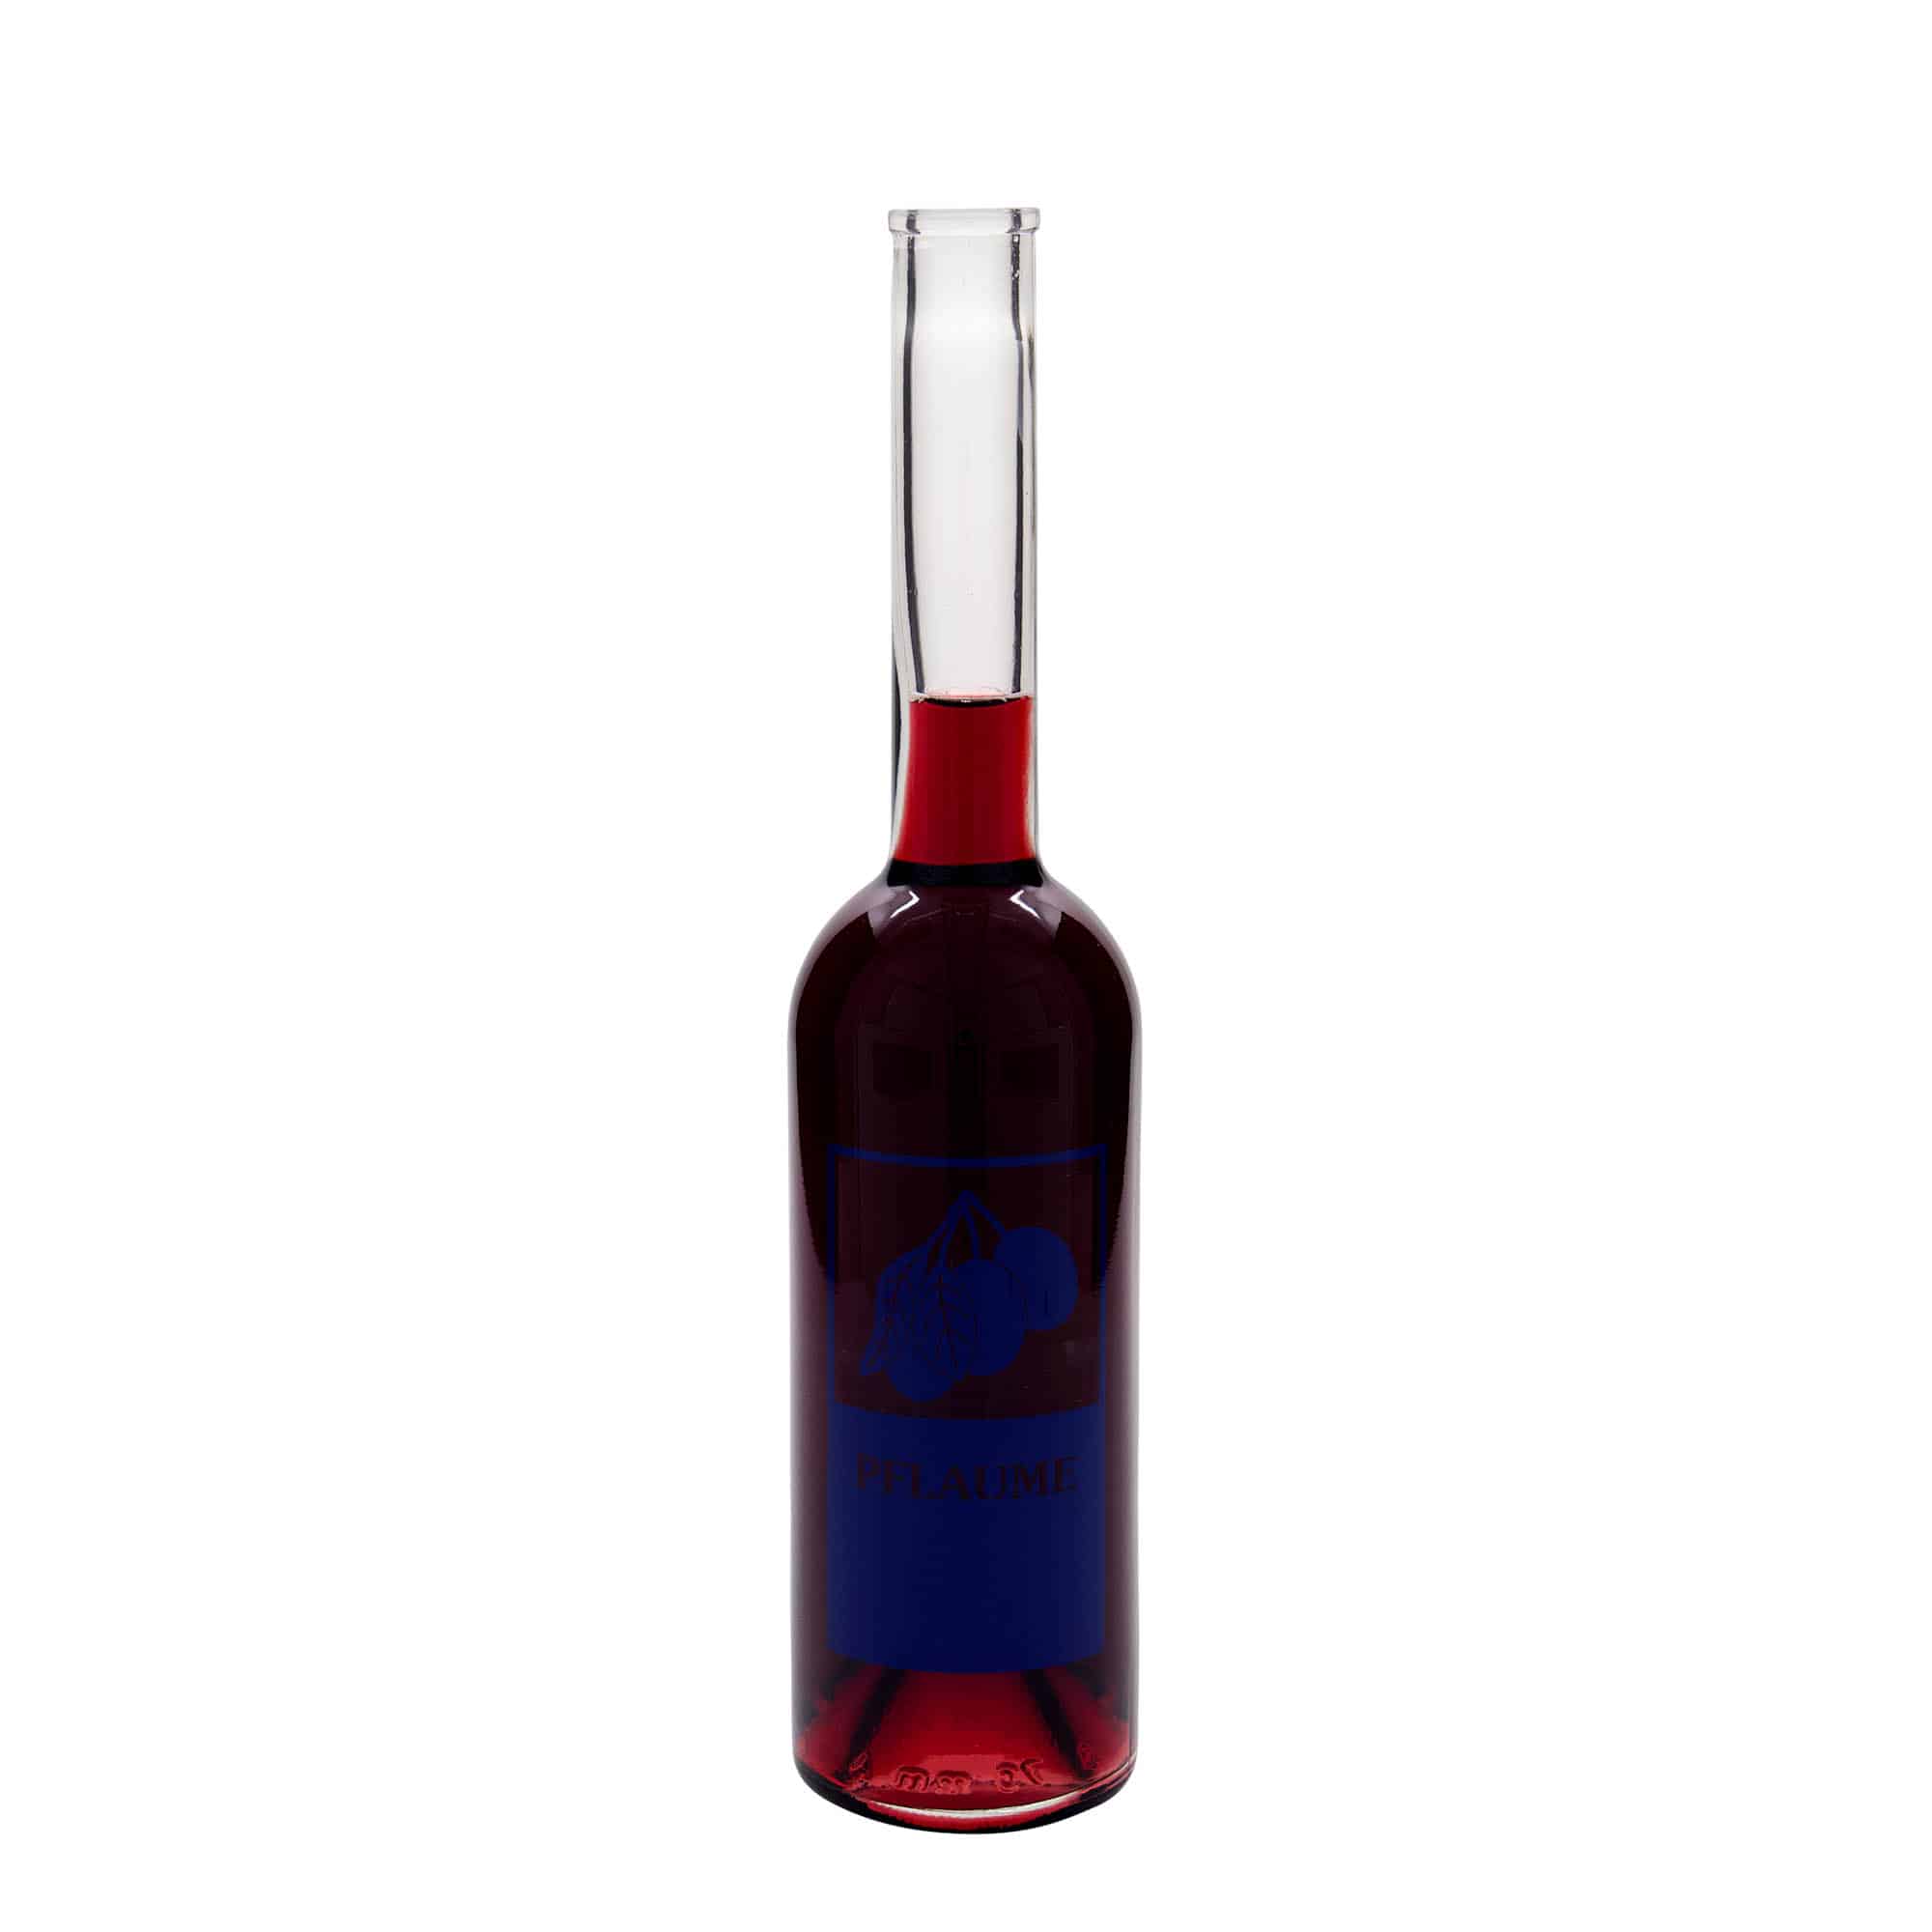 500 ml glass bottle 'Opera', print: plum, closure: cork